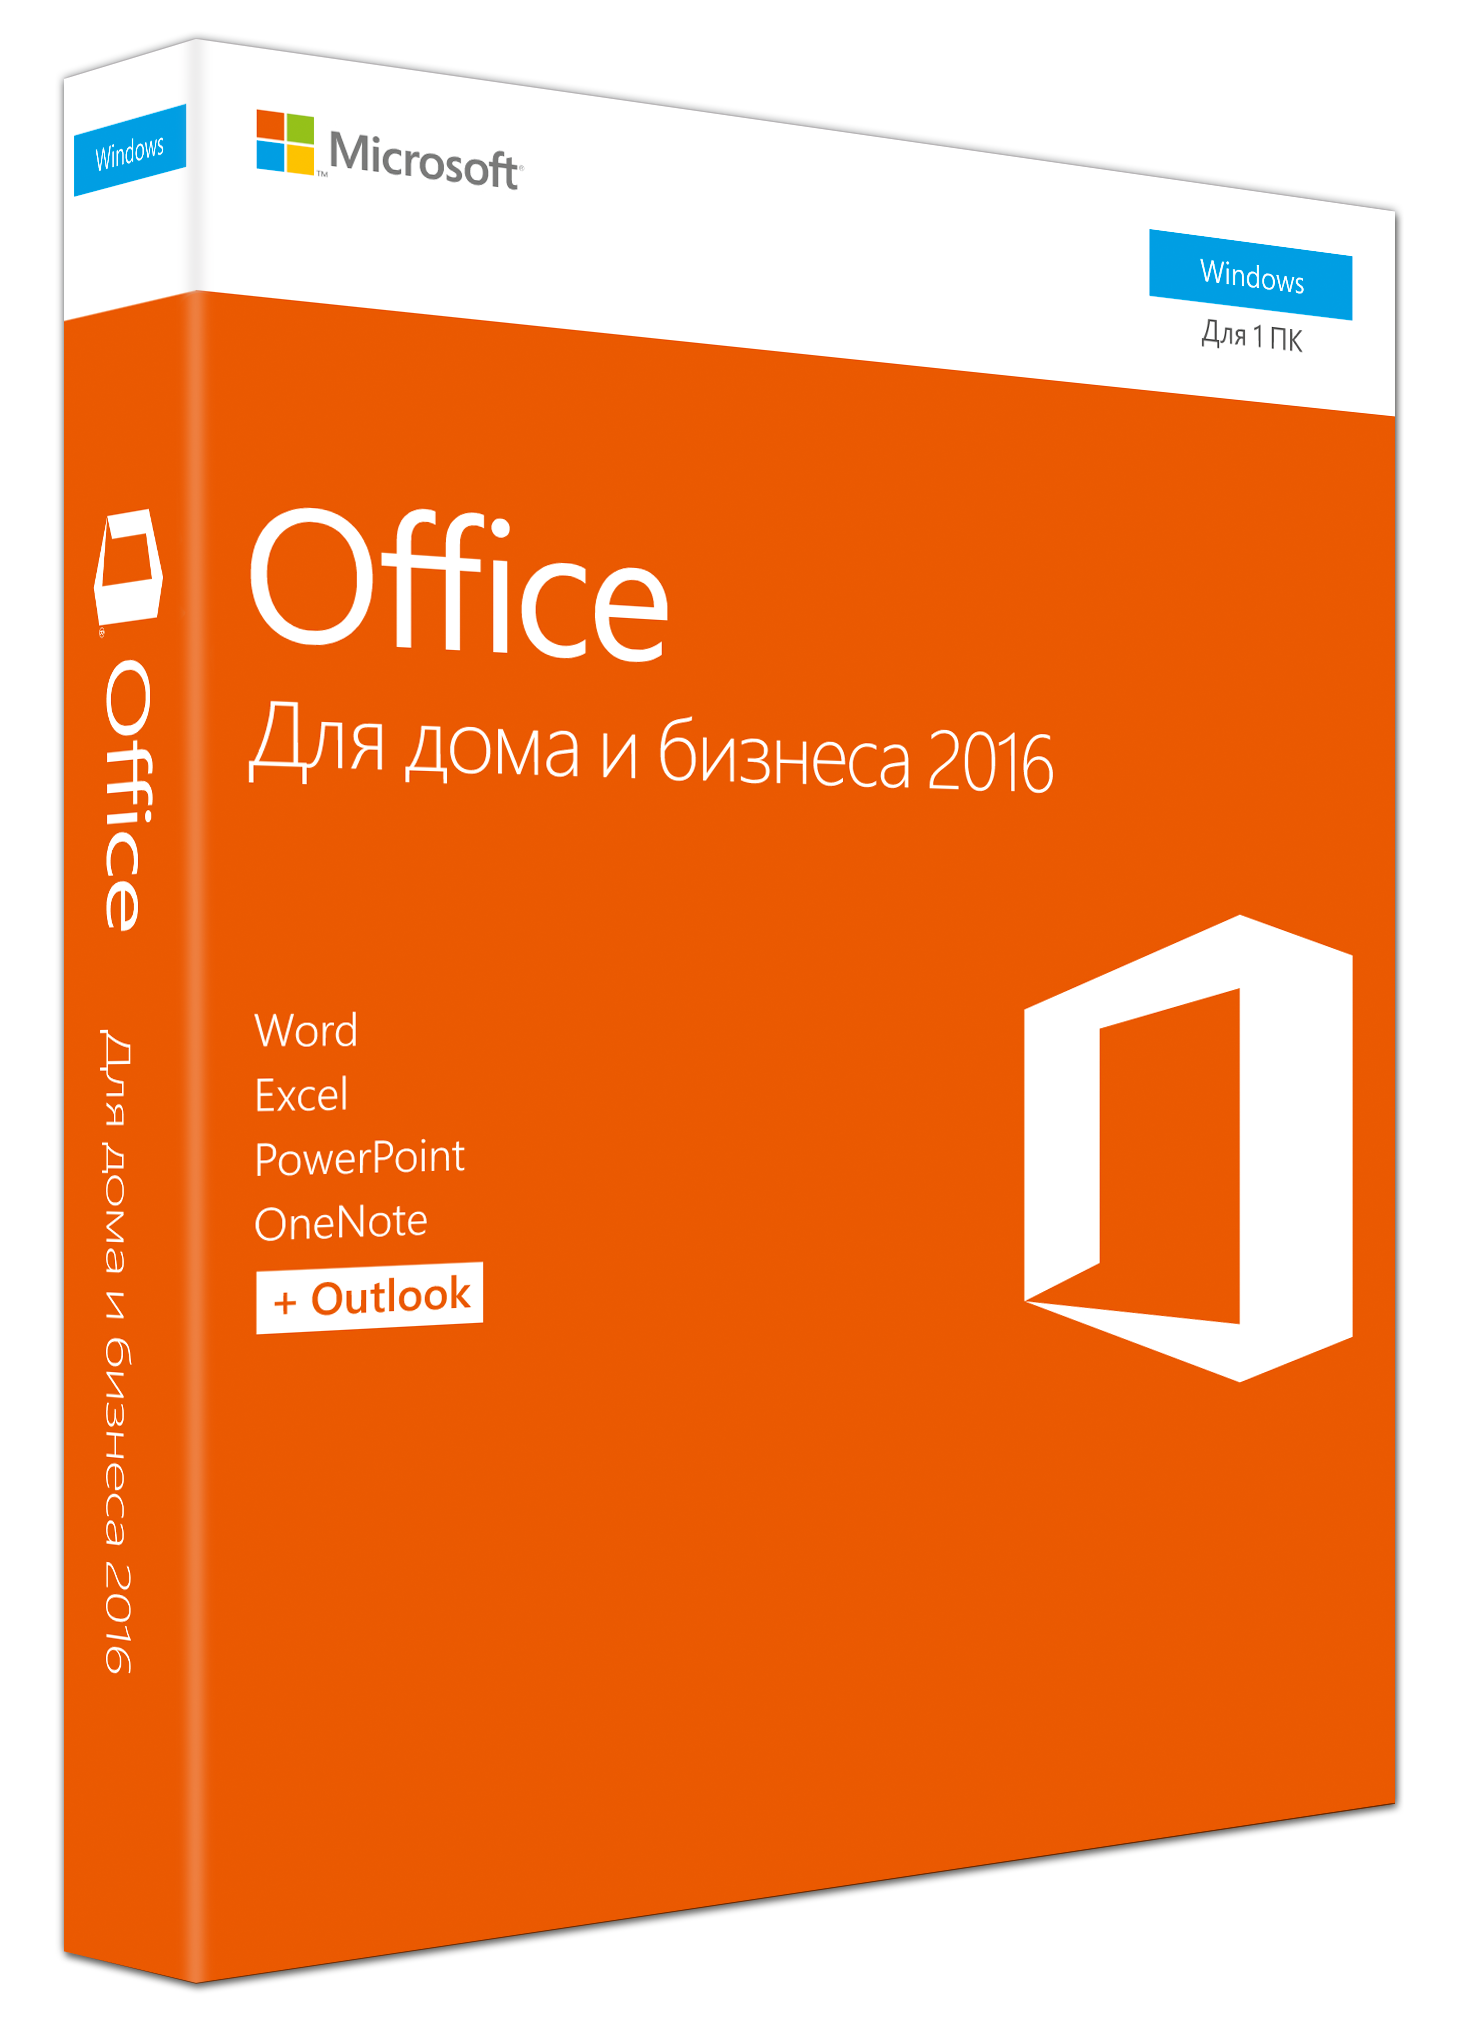 Microsoft Office Для дома и бизнеса 2016 (коробка) (1ПК бессрочно) Russian BOX (T5D-02292/T5D-02705)